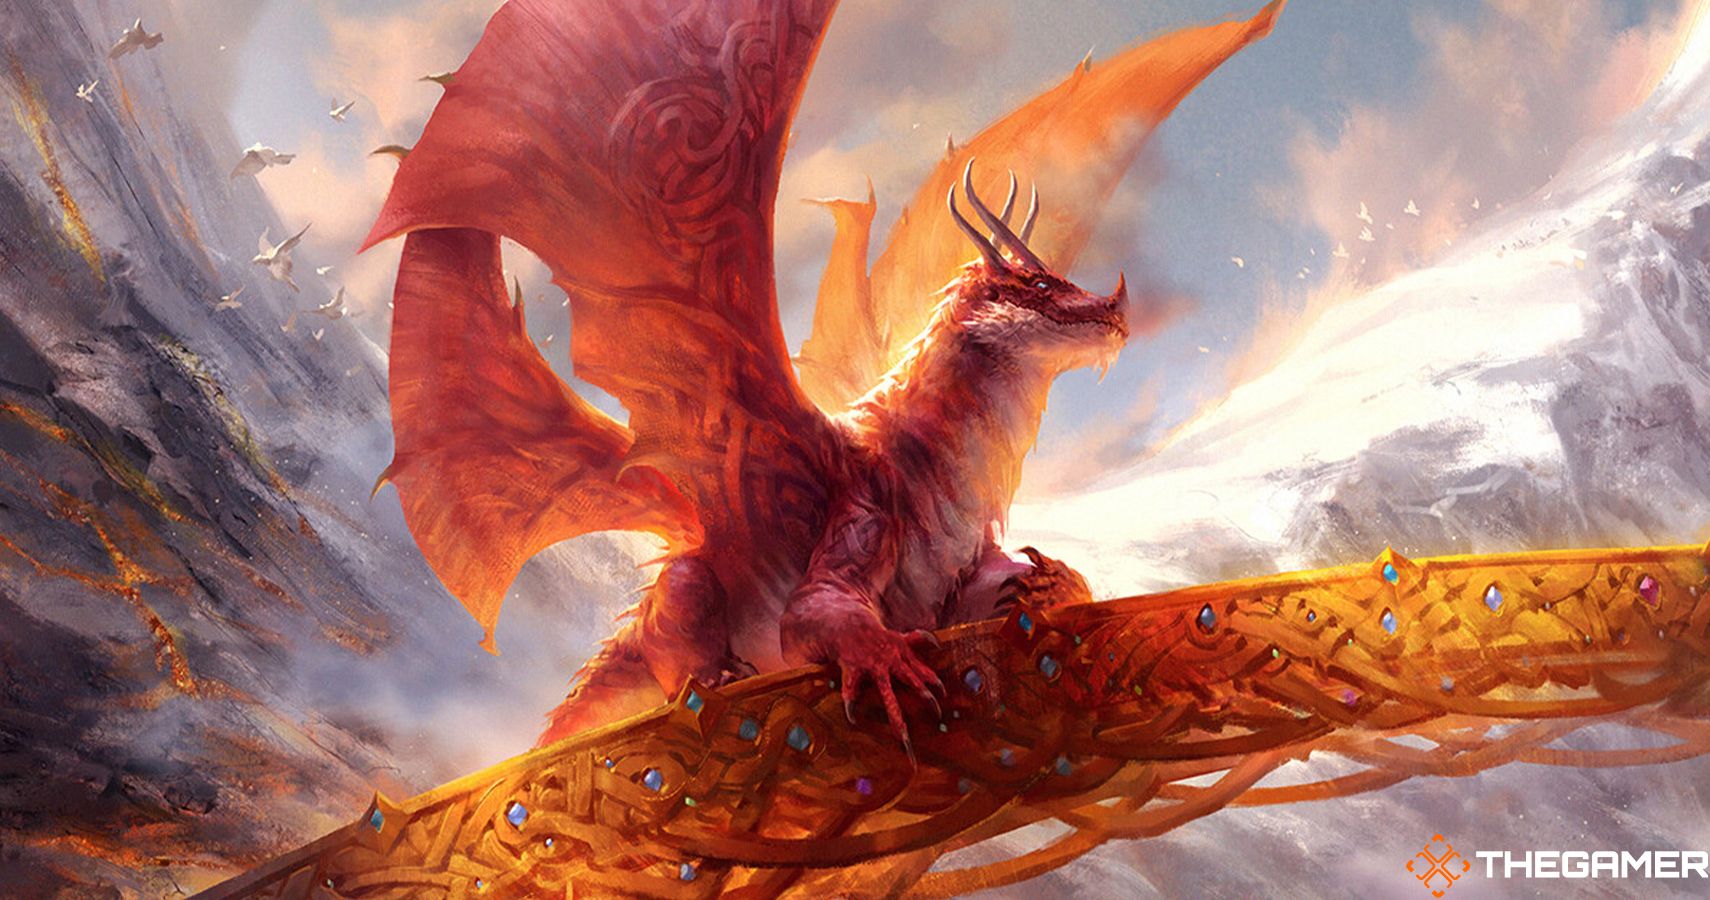 Goldspan Dragon by Andrew Mar